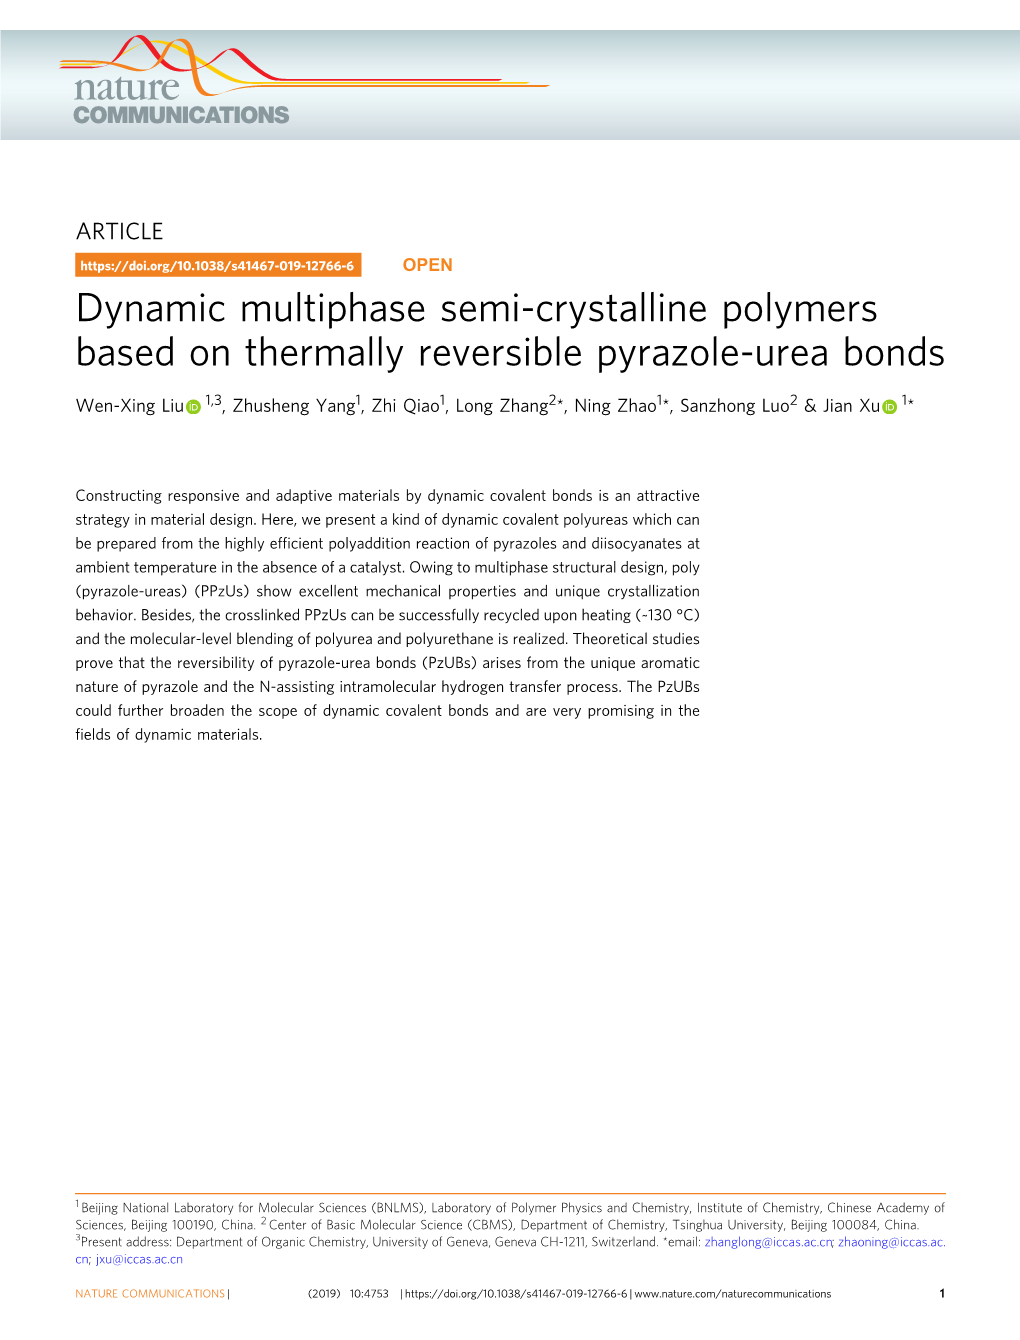 Dynamic Multiphase Semi-Crystalline Polymers Based on Thermally Reversible Pyrazole-Urea Bonds